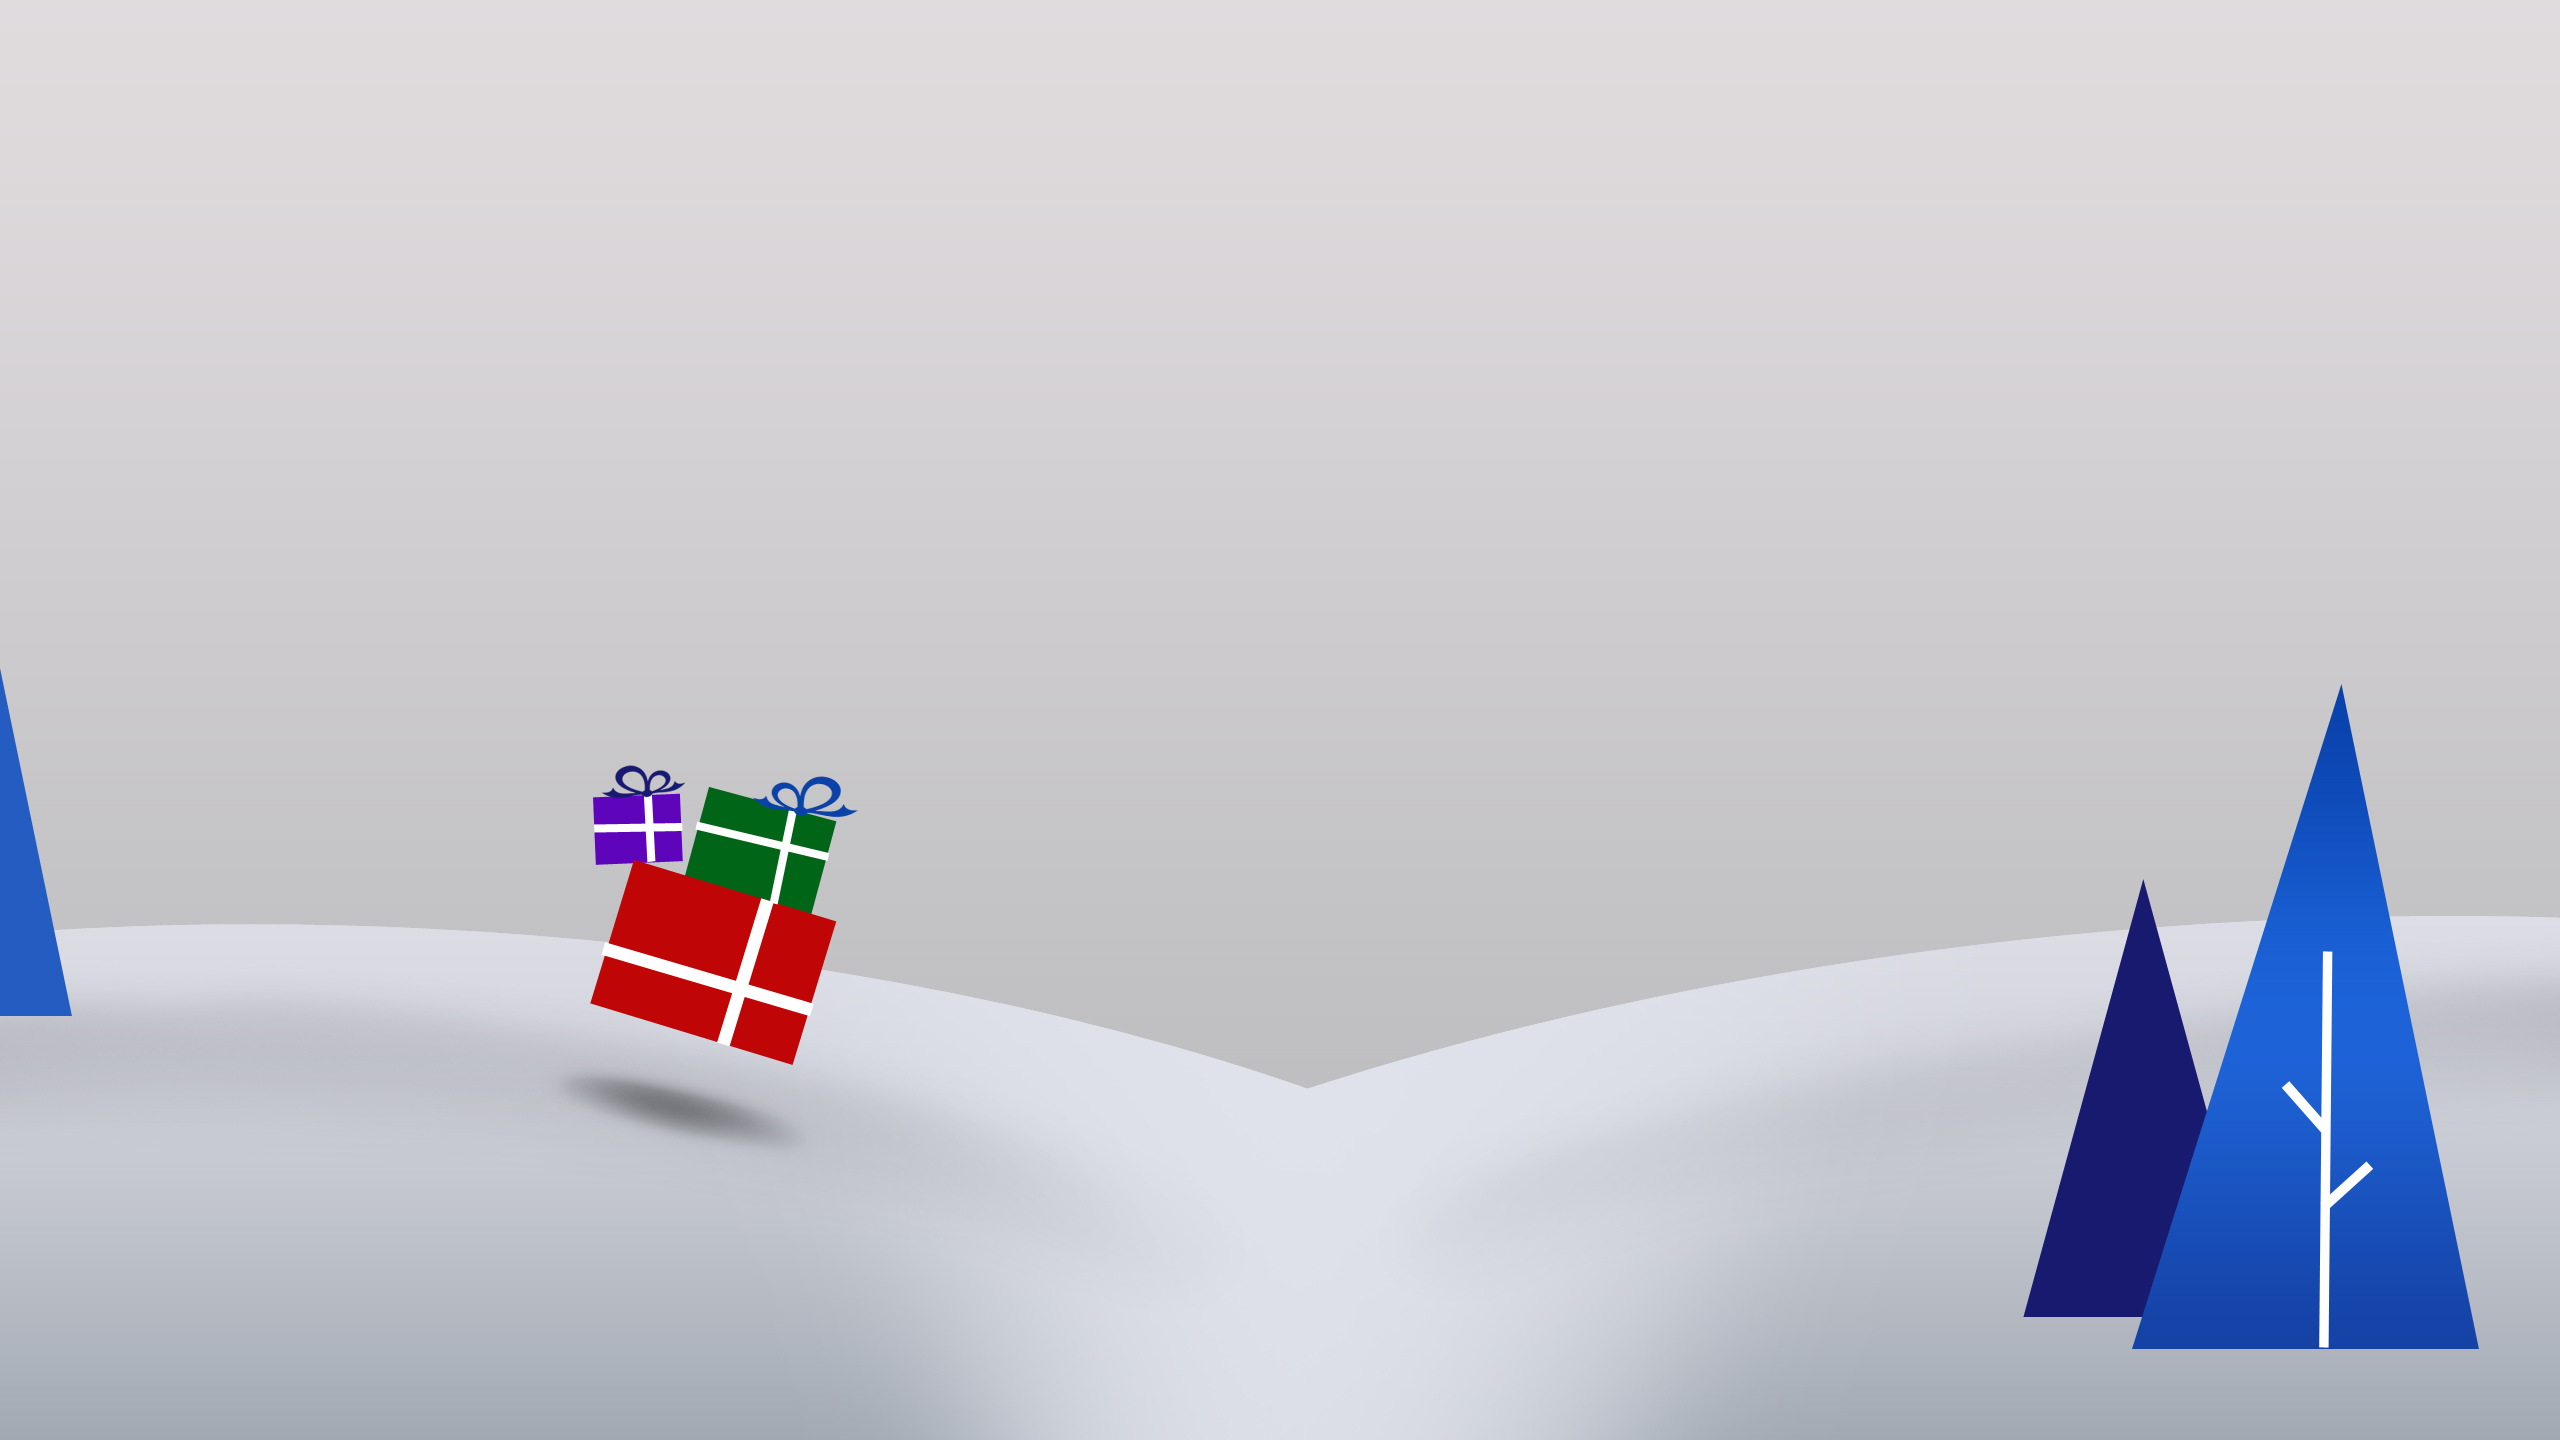 General 2560x1440 Windows 10 presents simple background digital art minimalism